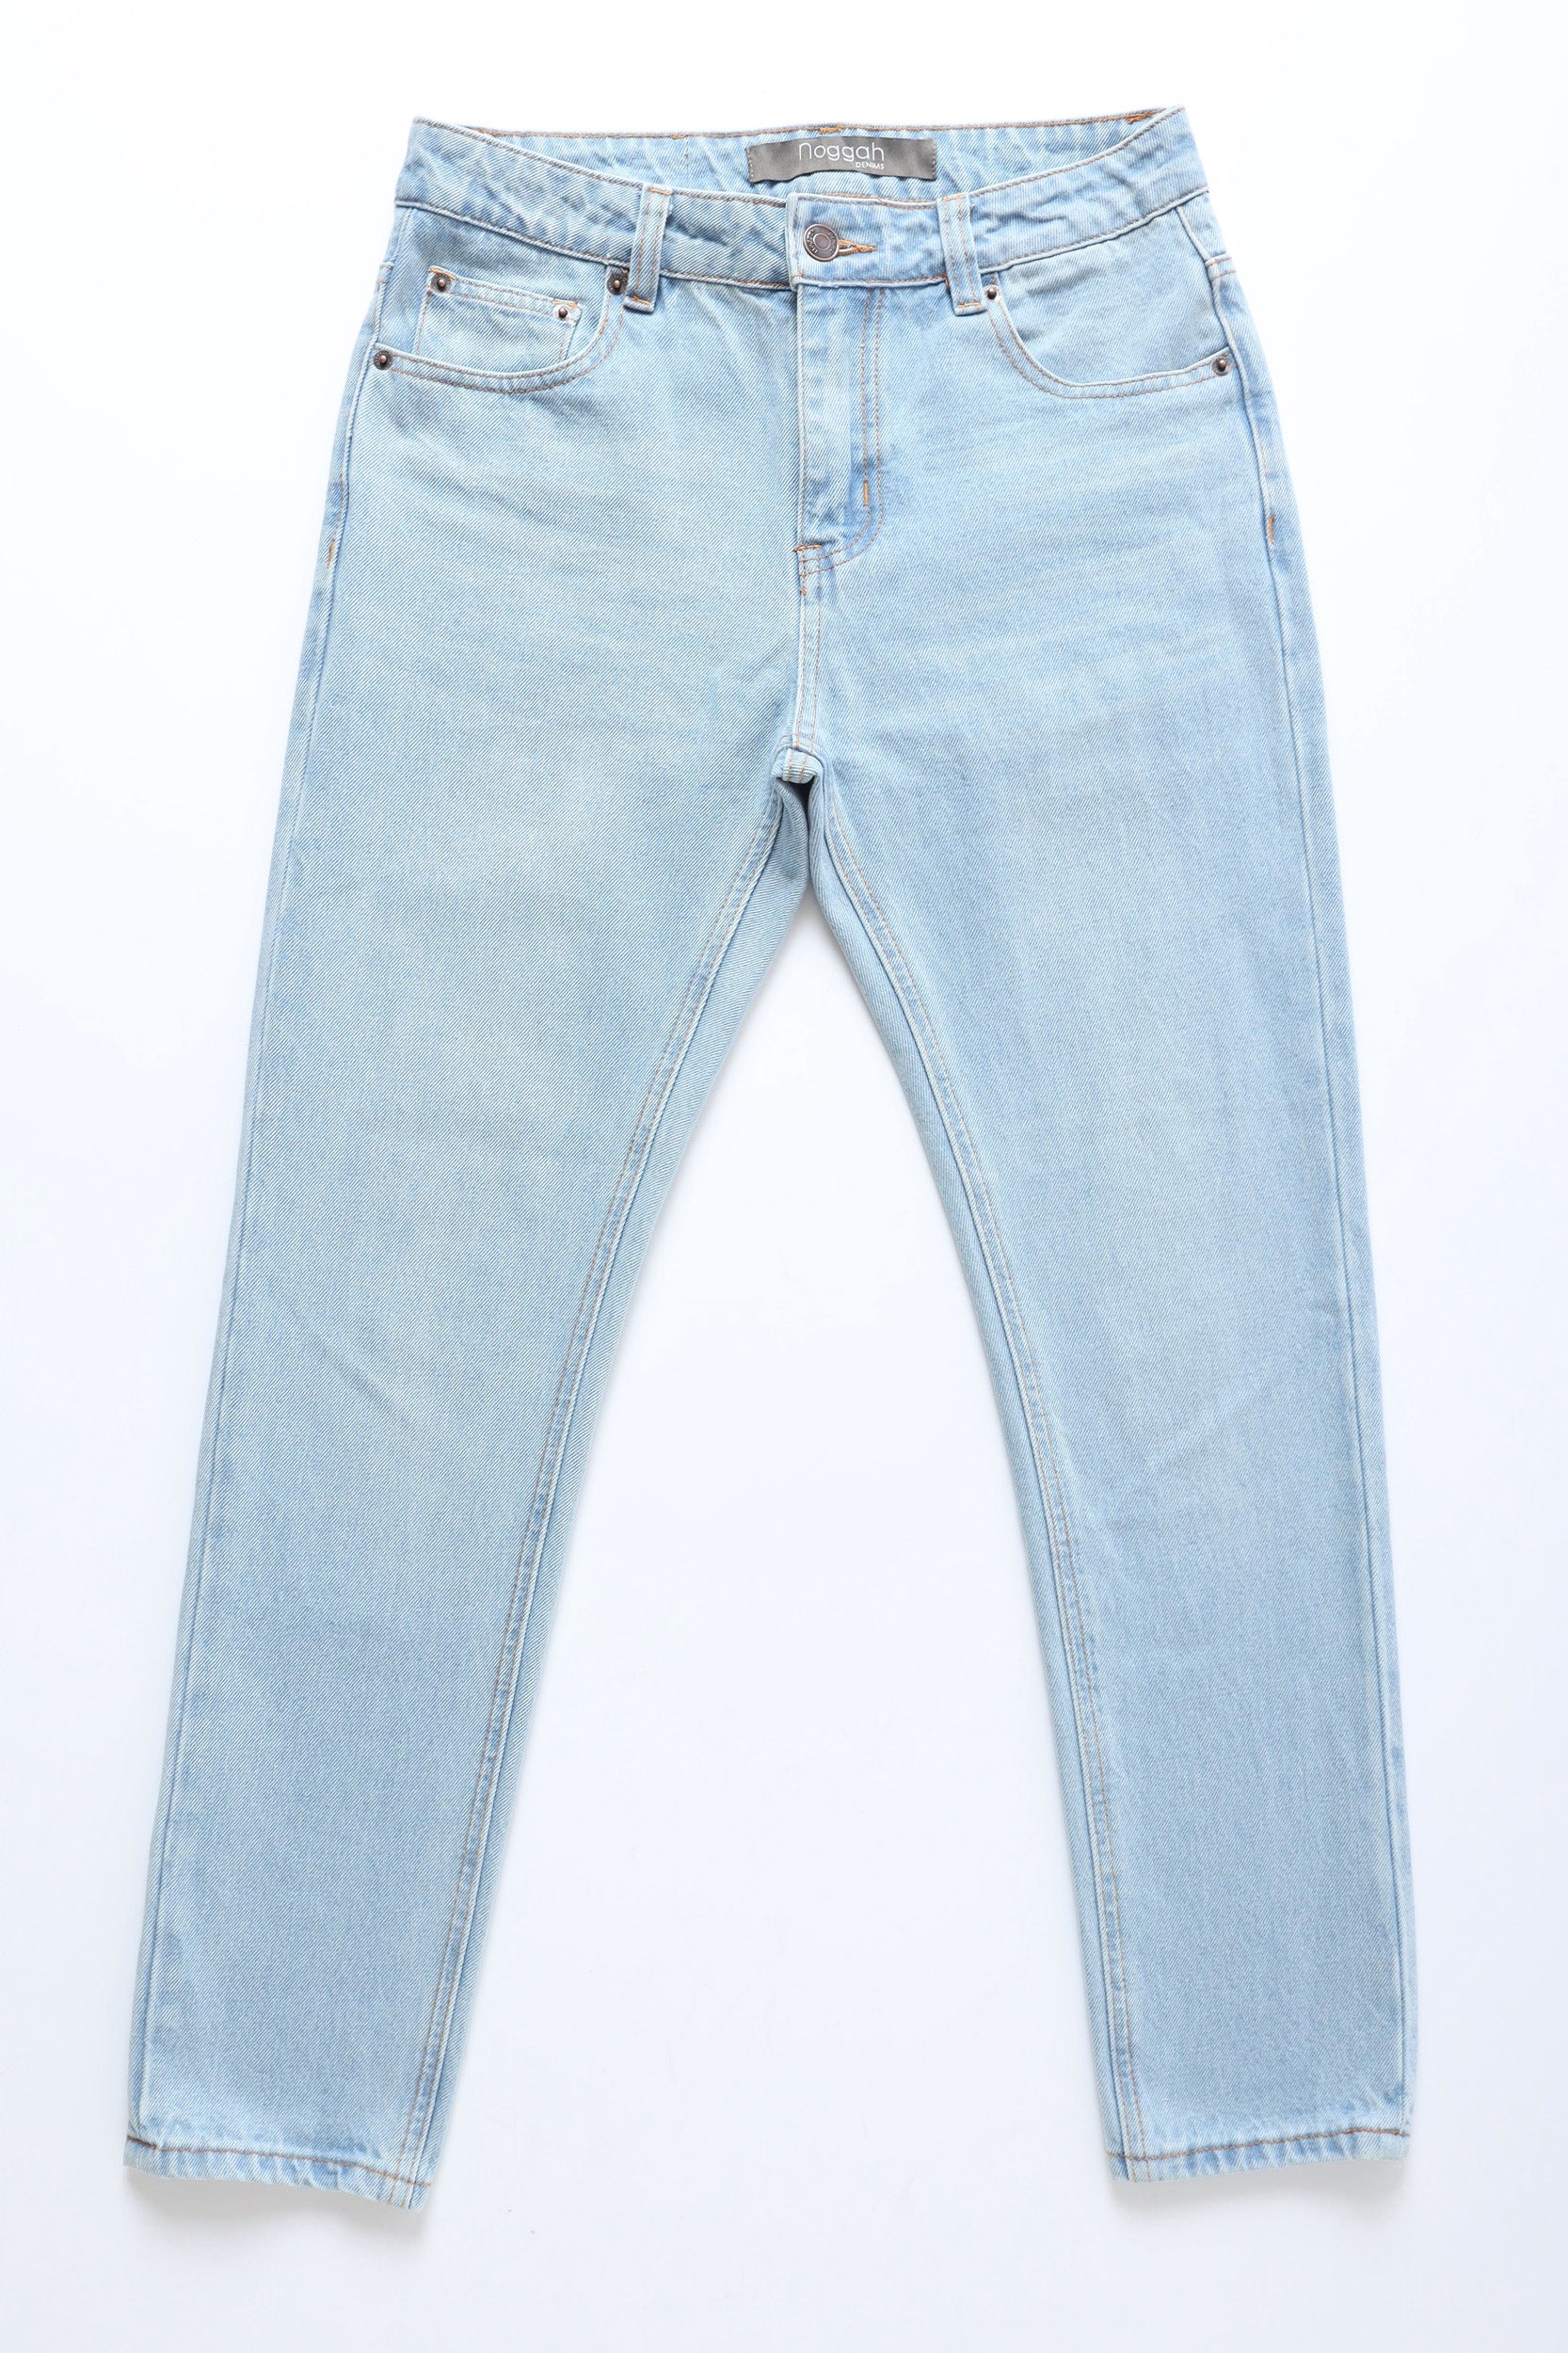 Buy Sorrica Women's Jeans Stretch Straight-Leg Boyfriend Denim Pants (US  14, Light Blue) at Amazon.in